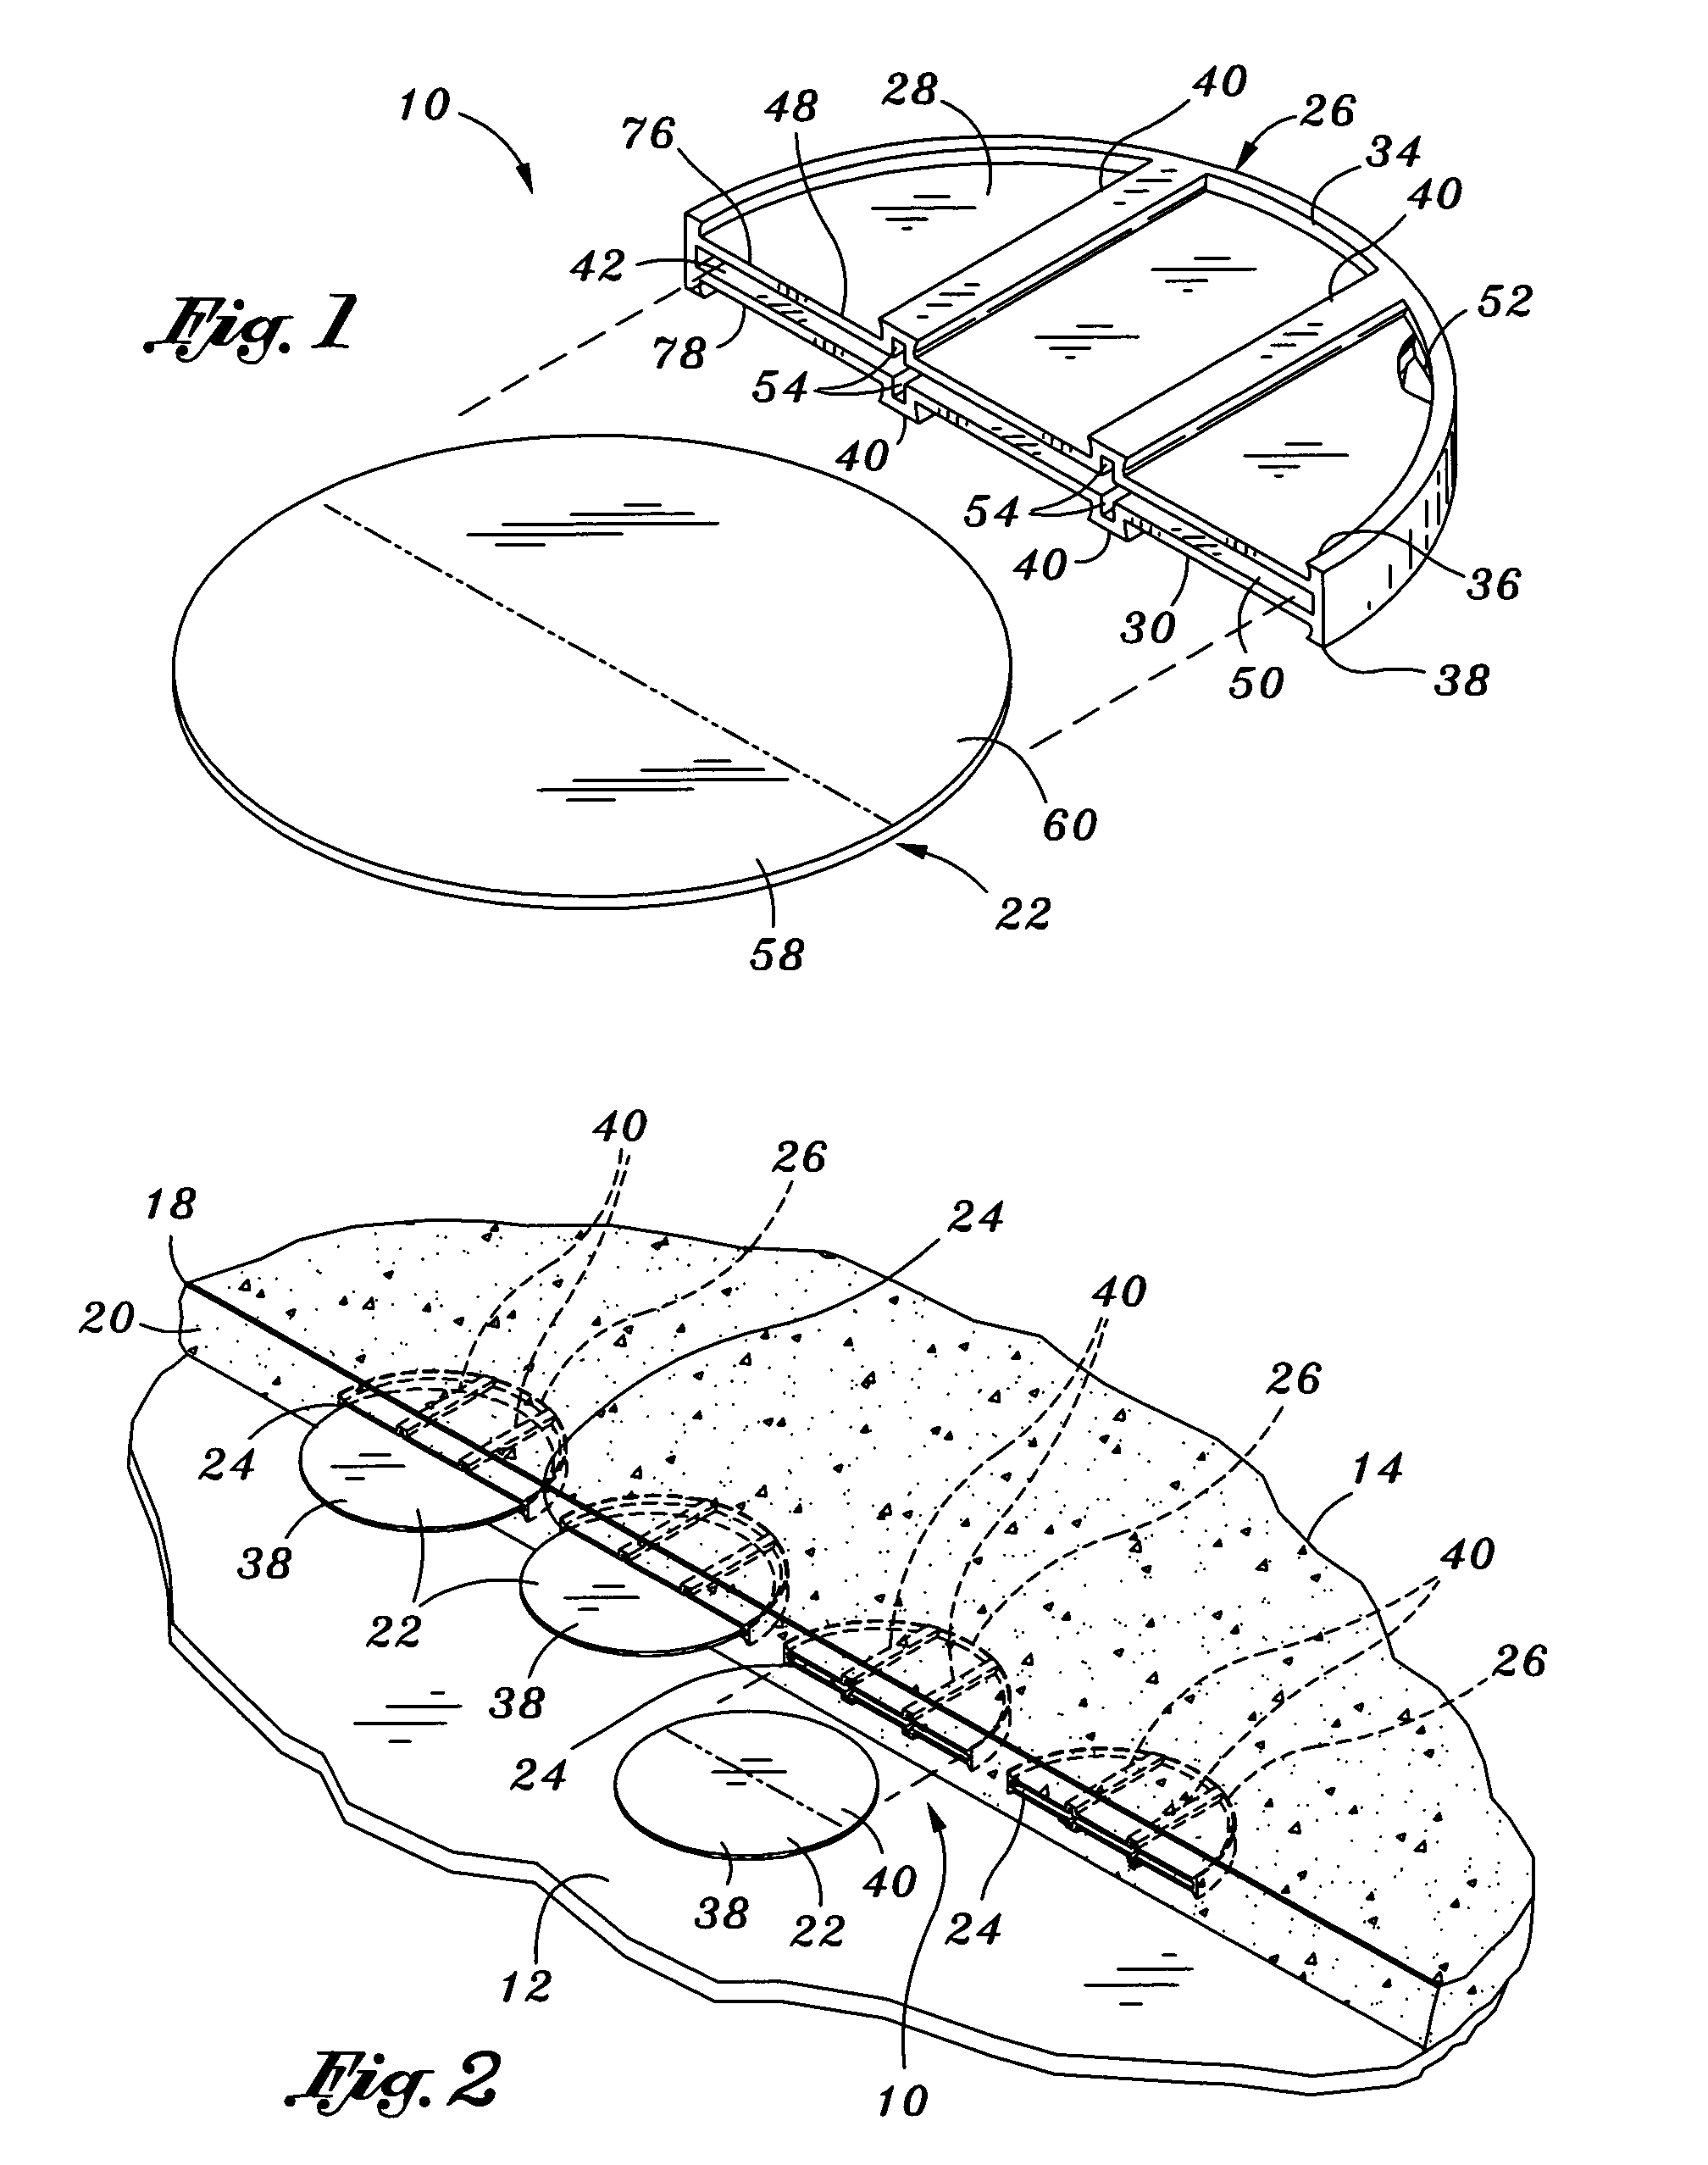 Disk plate concrete dowel system